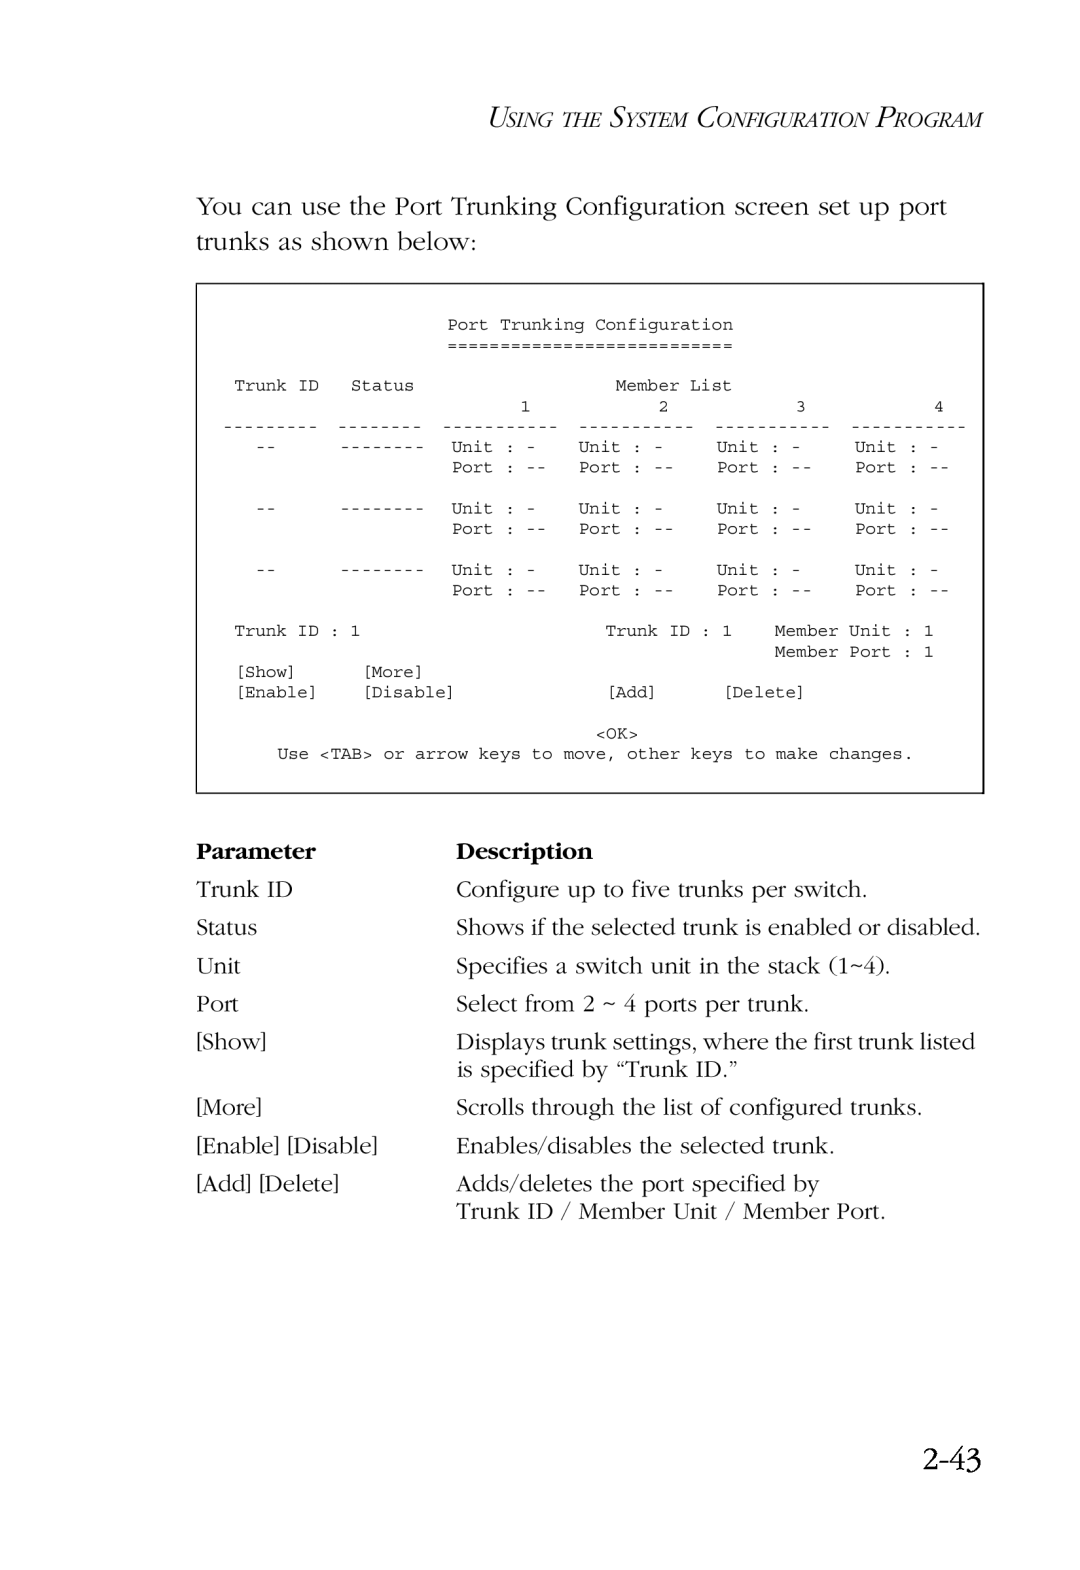 SMC Networks SMC6924VF manual 2-43, Parameter, Description 